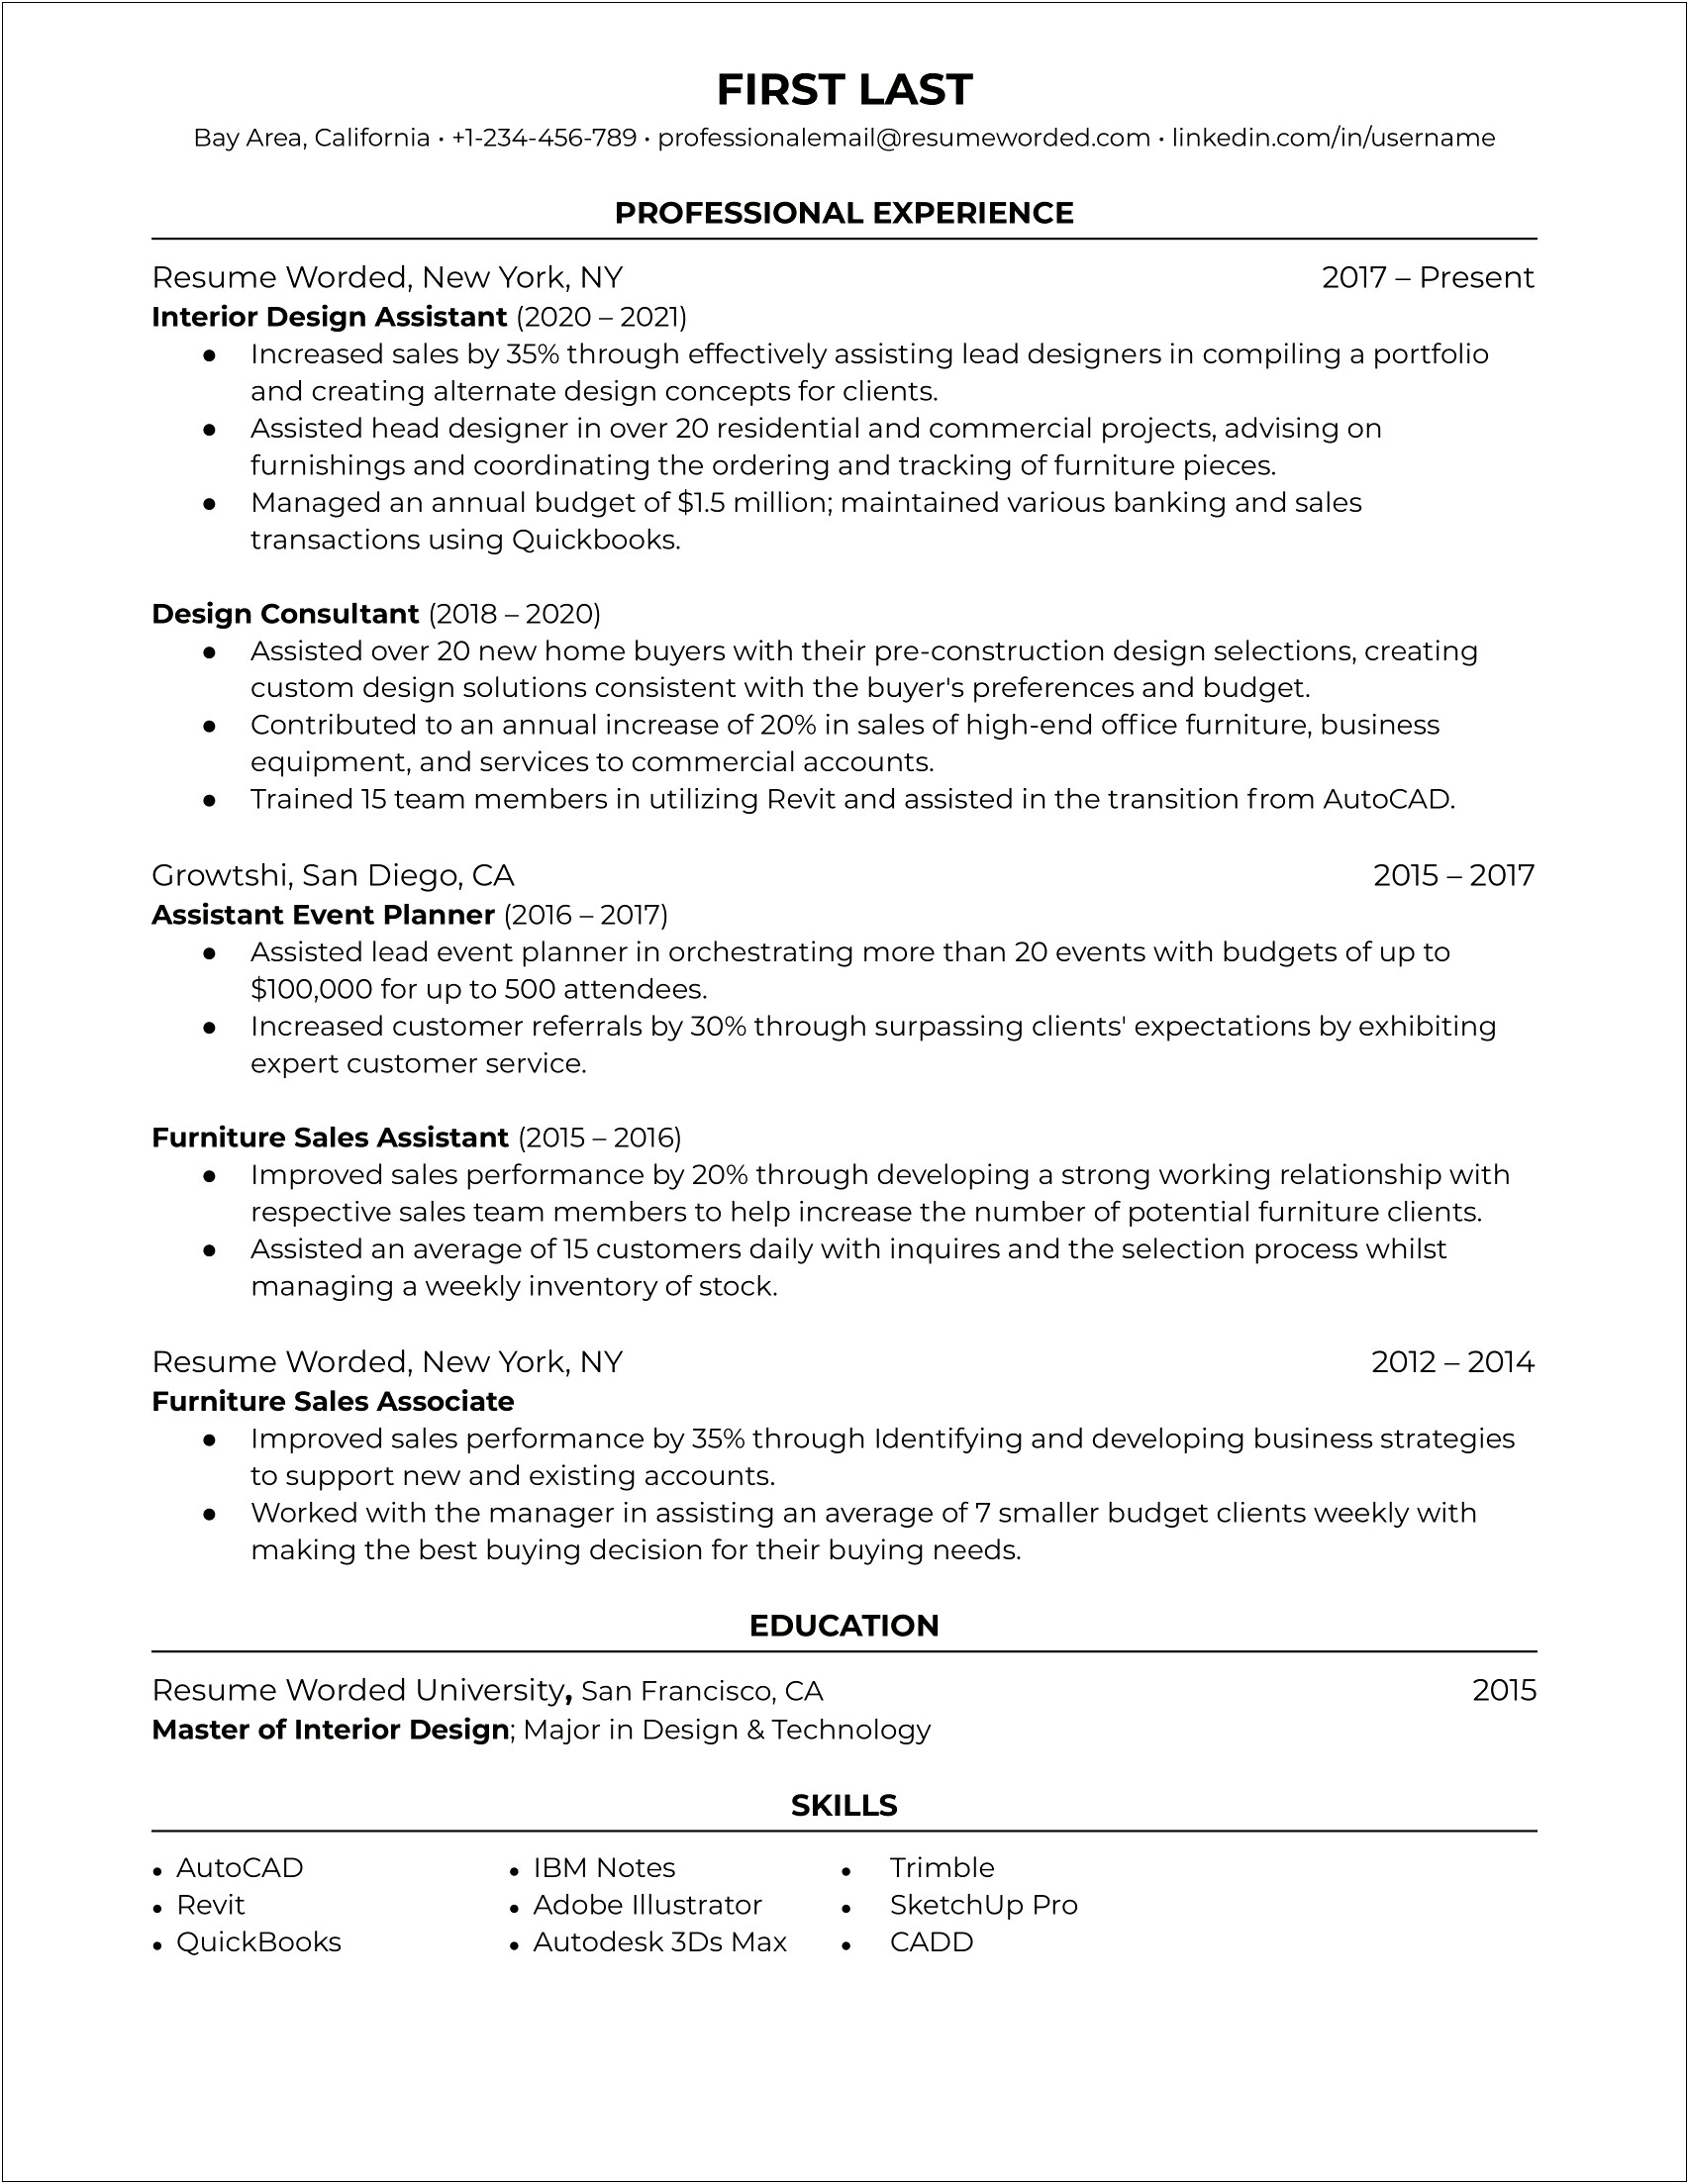 Interior Design Job Description For Resume